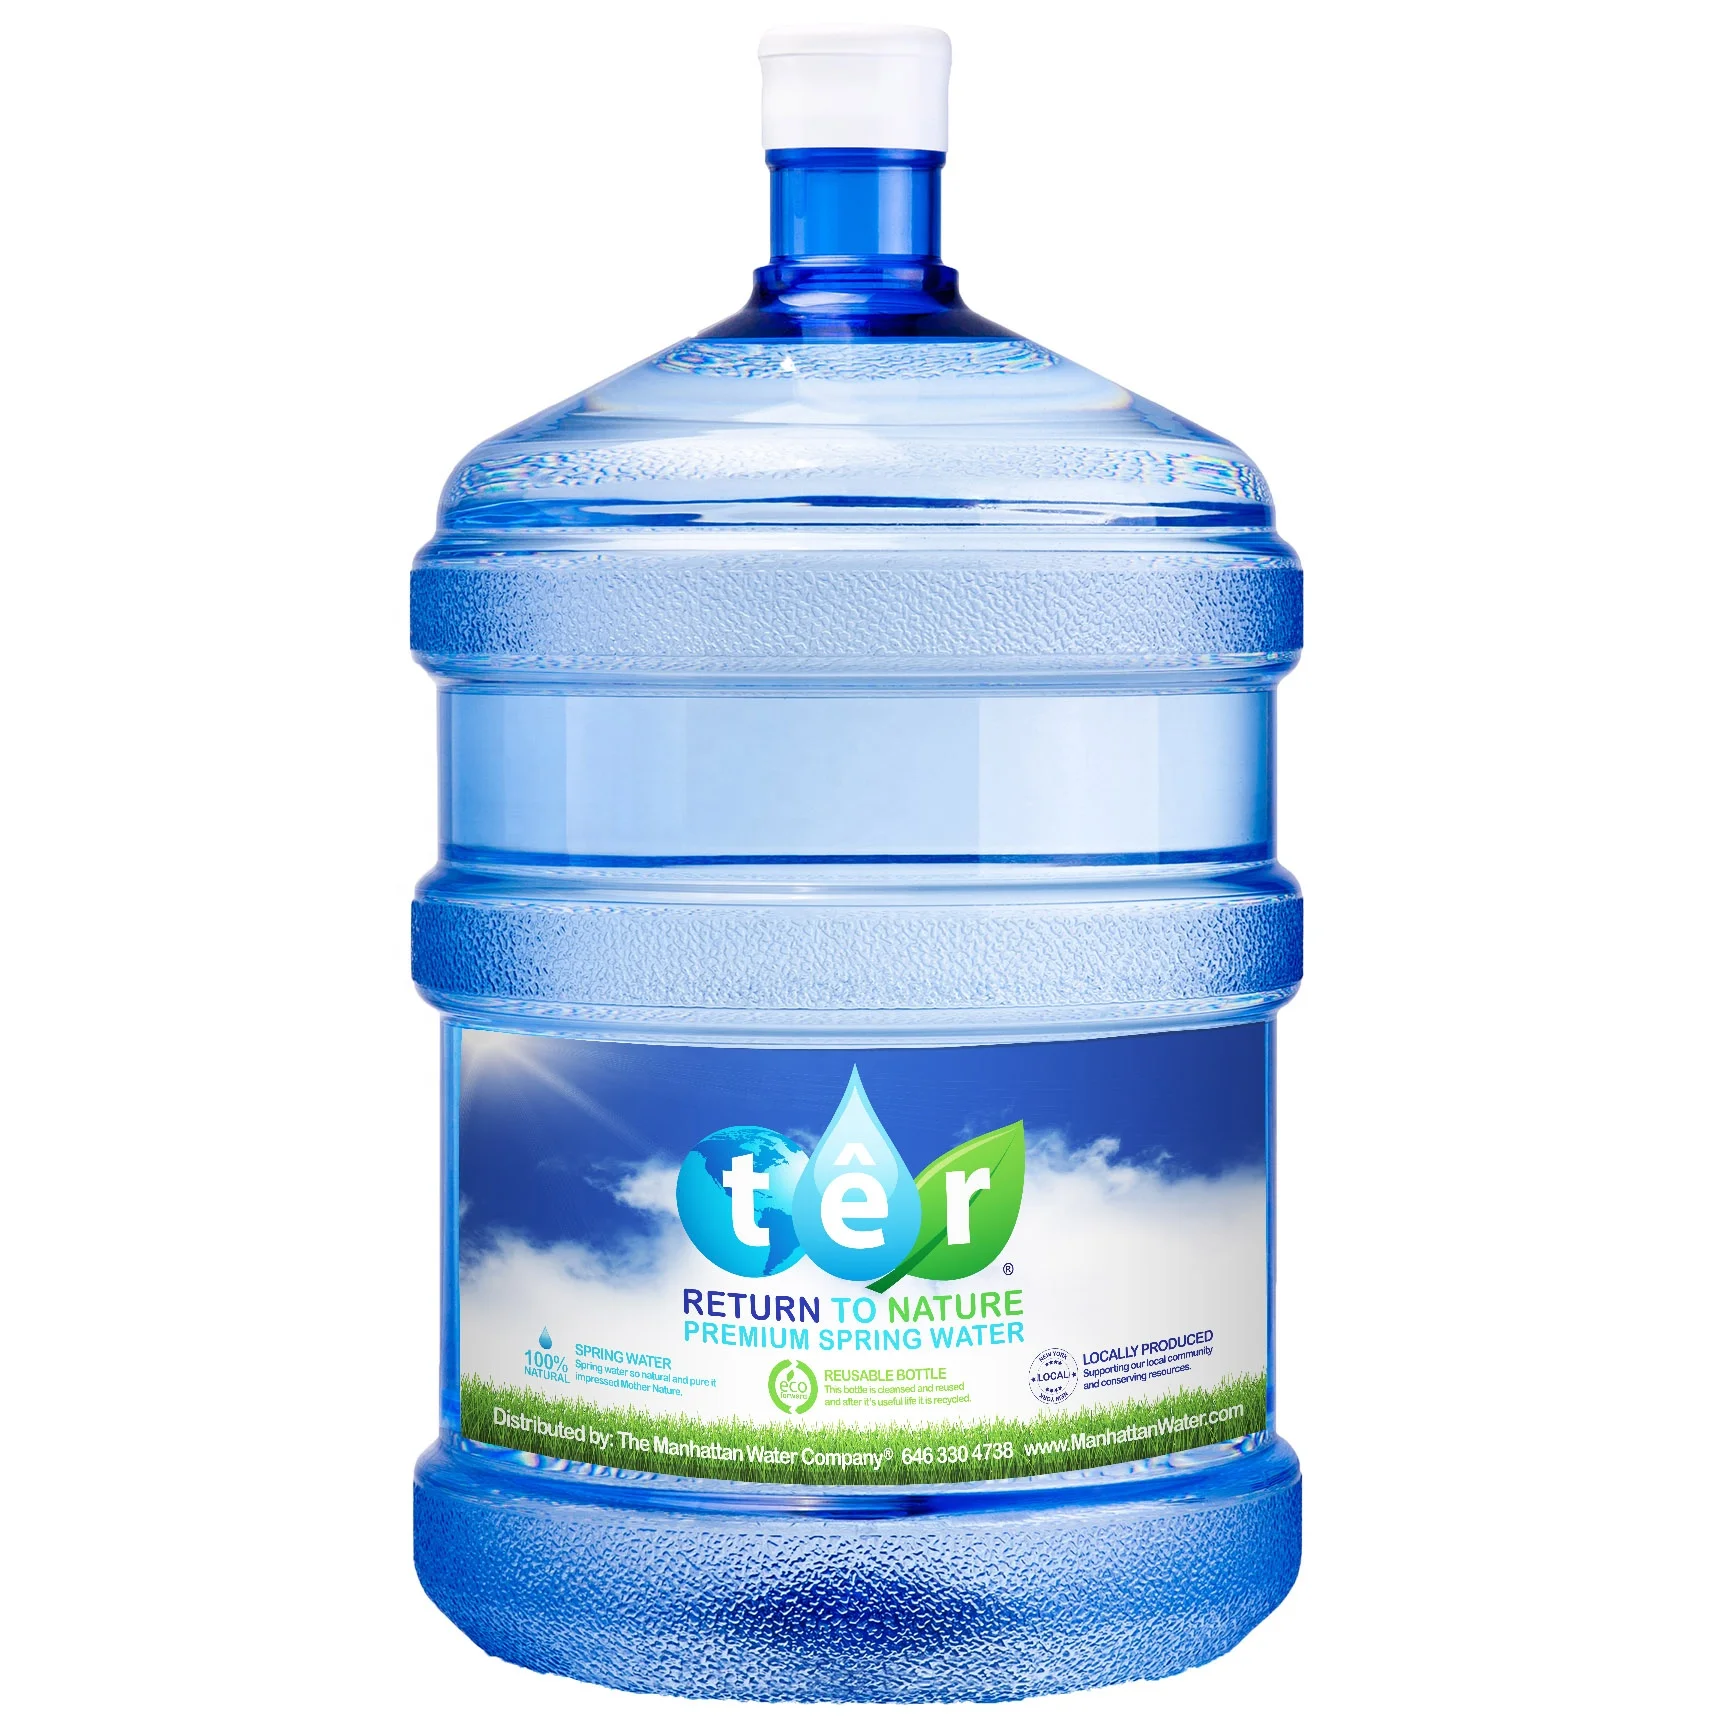 Вода 18 ru. Бутылка Волжанка 19 литров. 5 Gallon вода. Water 18.9 l. 18.9 L Water Bottle.